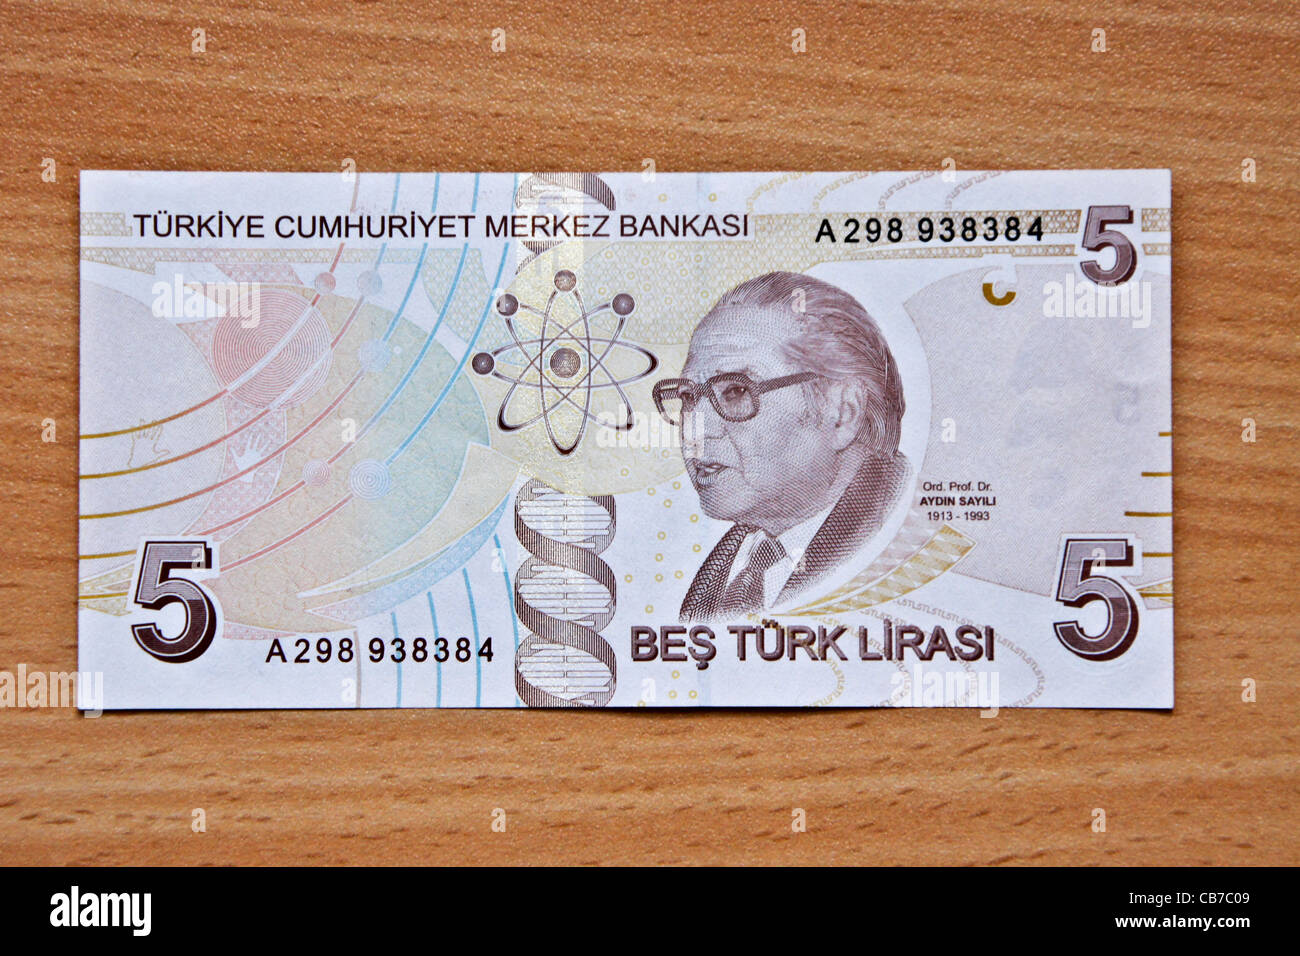 Reverse side of Turkish money (lira) Stock Photo